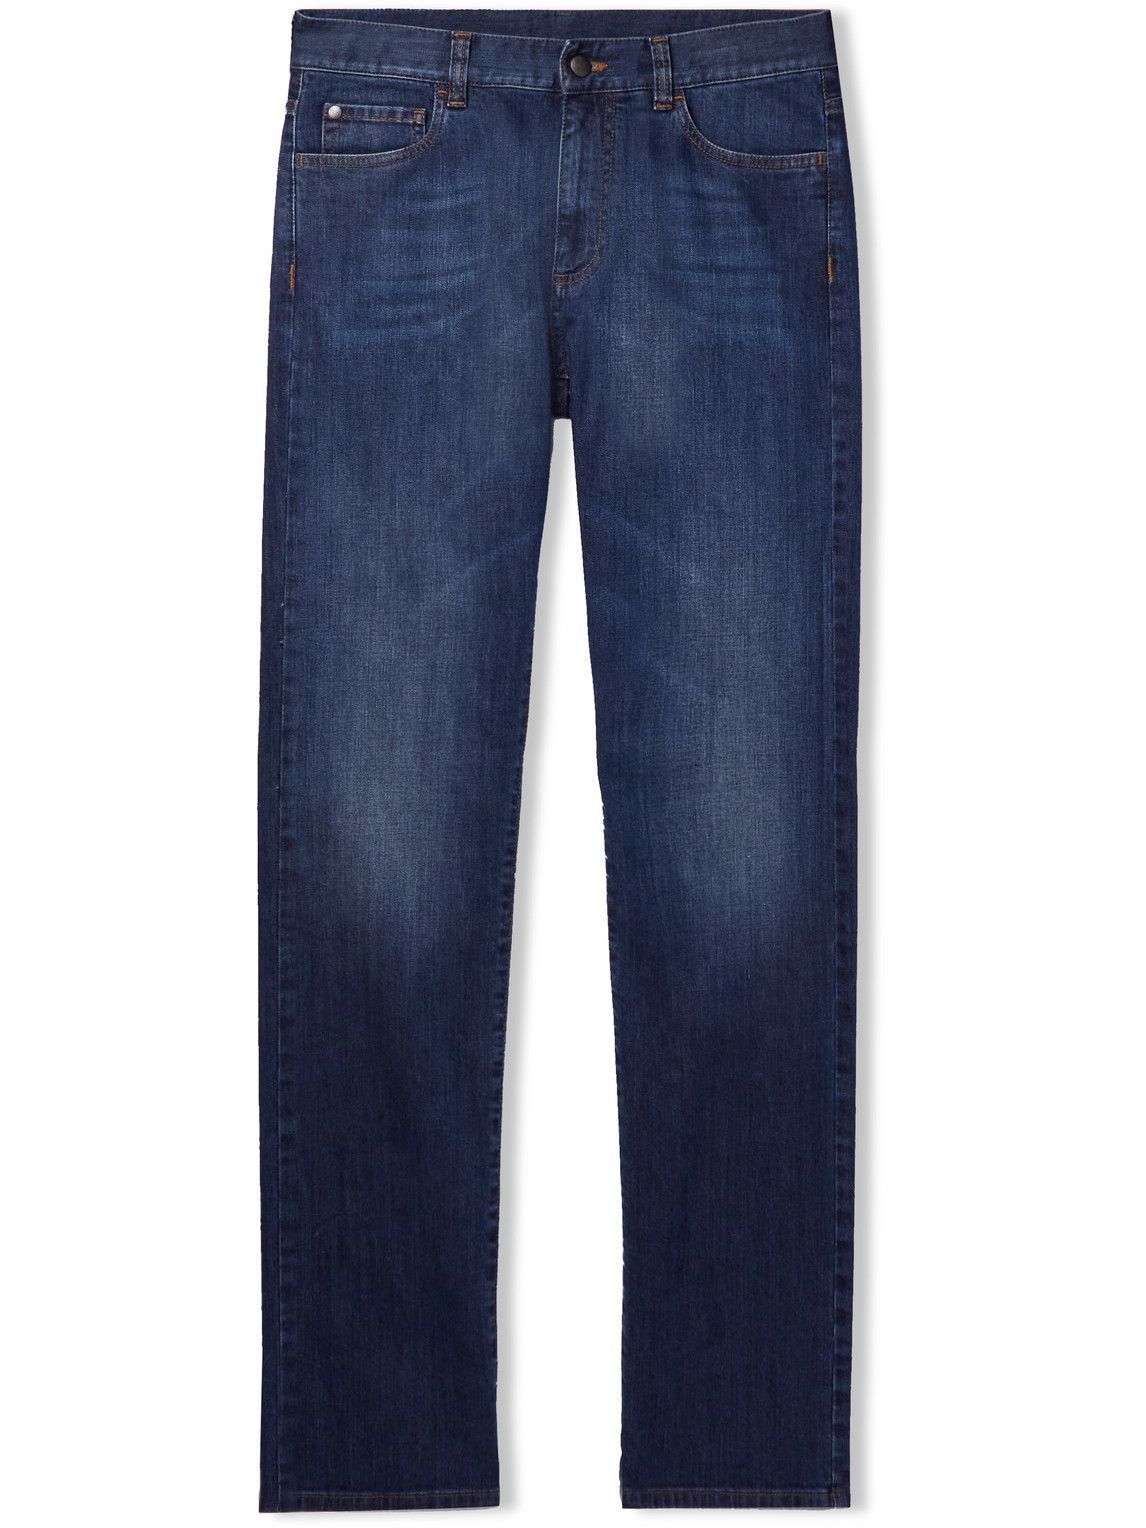 Canali - Slim-Fit Jeans - Blue Canali